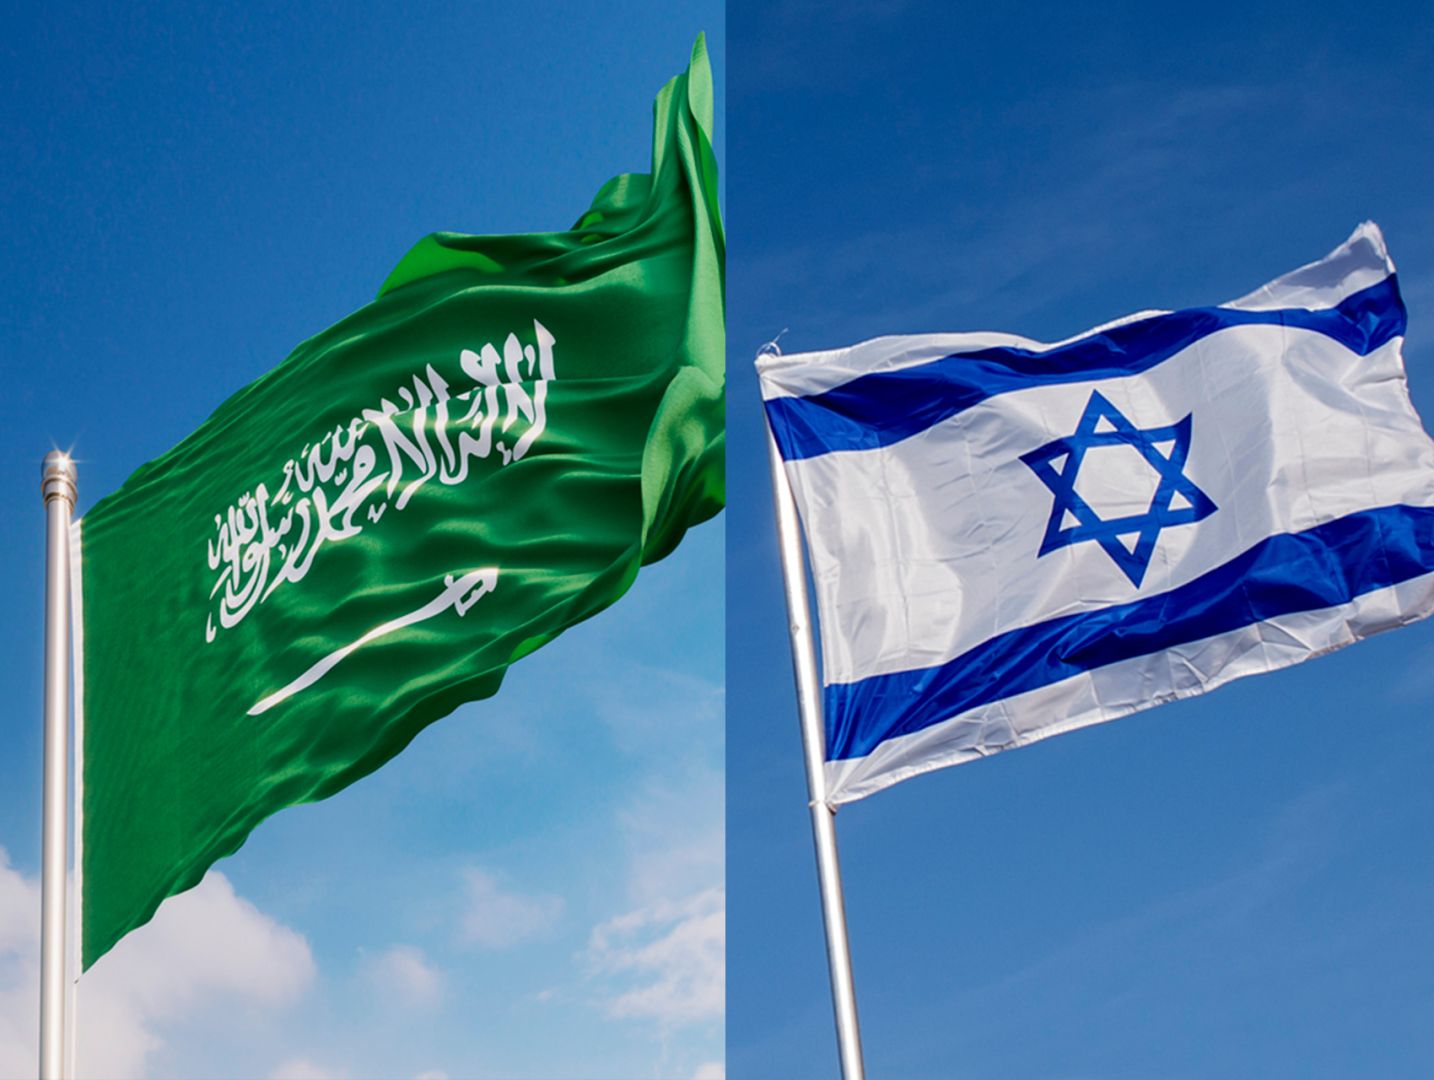 Israel and Saudi Arabia, normalization of century